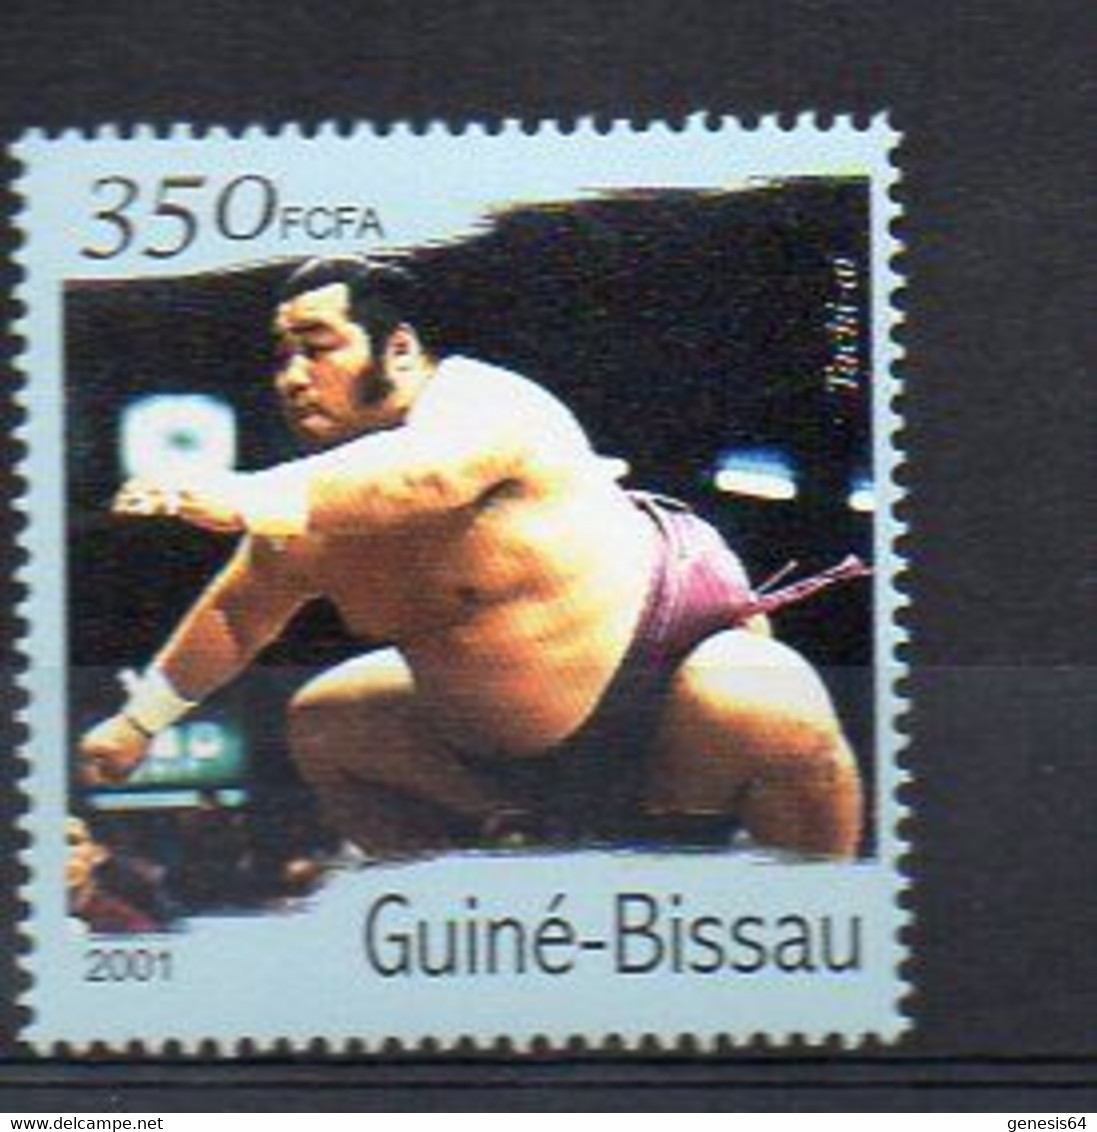 Sumo - (Guinea Bissau) MNH (2W2984) - Unclassified